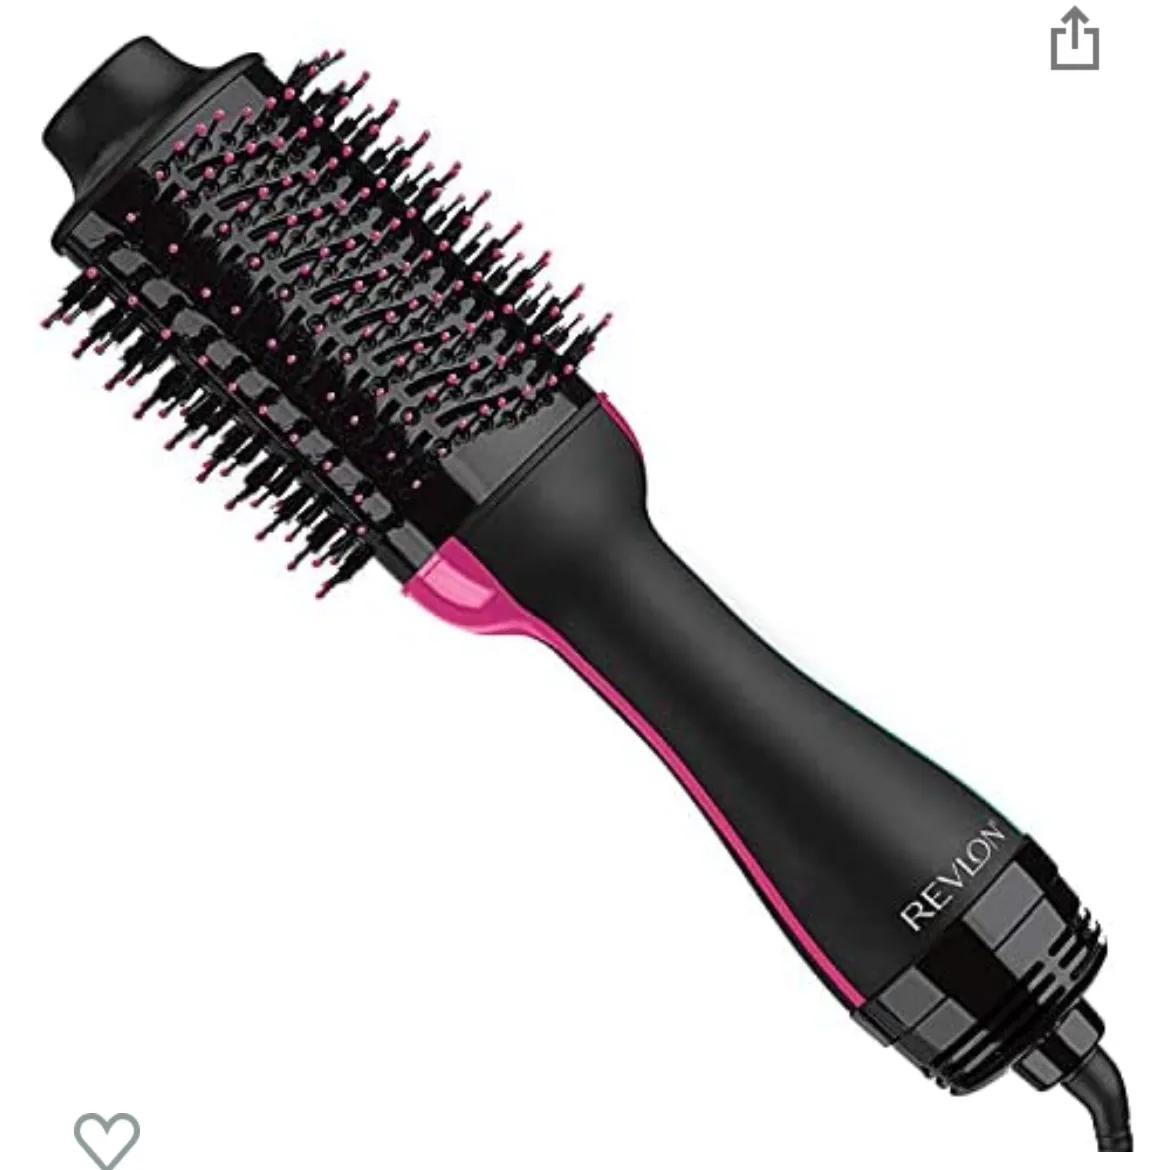 Revlon hairbrush dryer photo 1